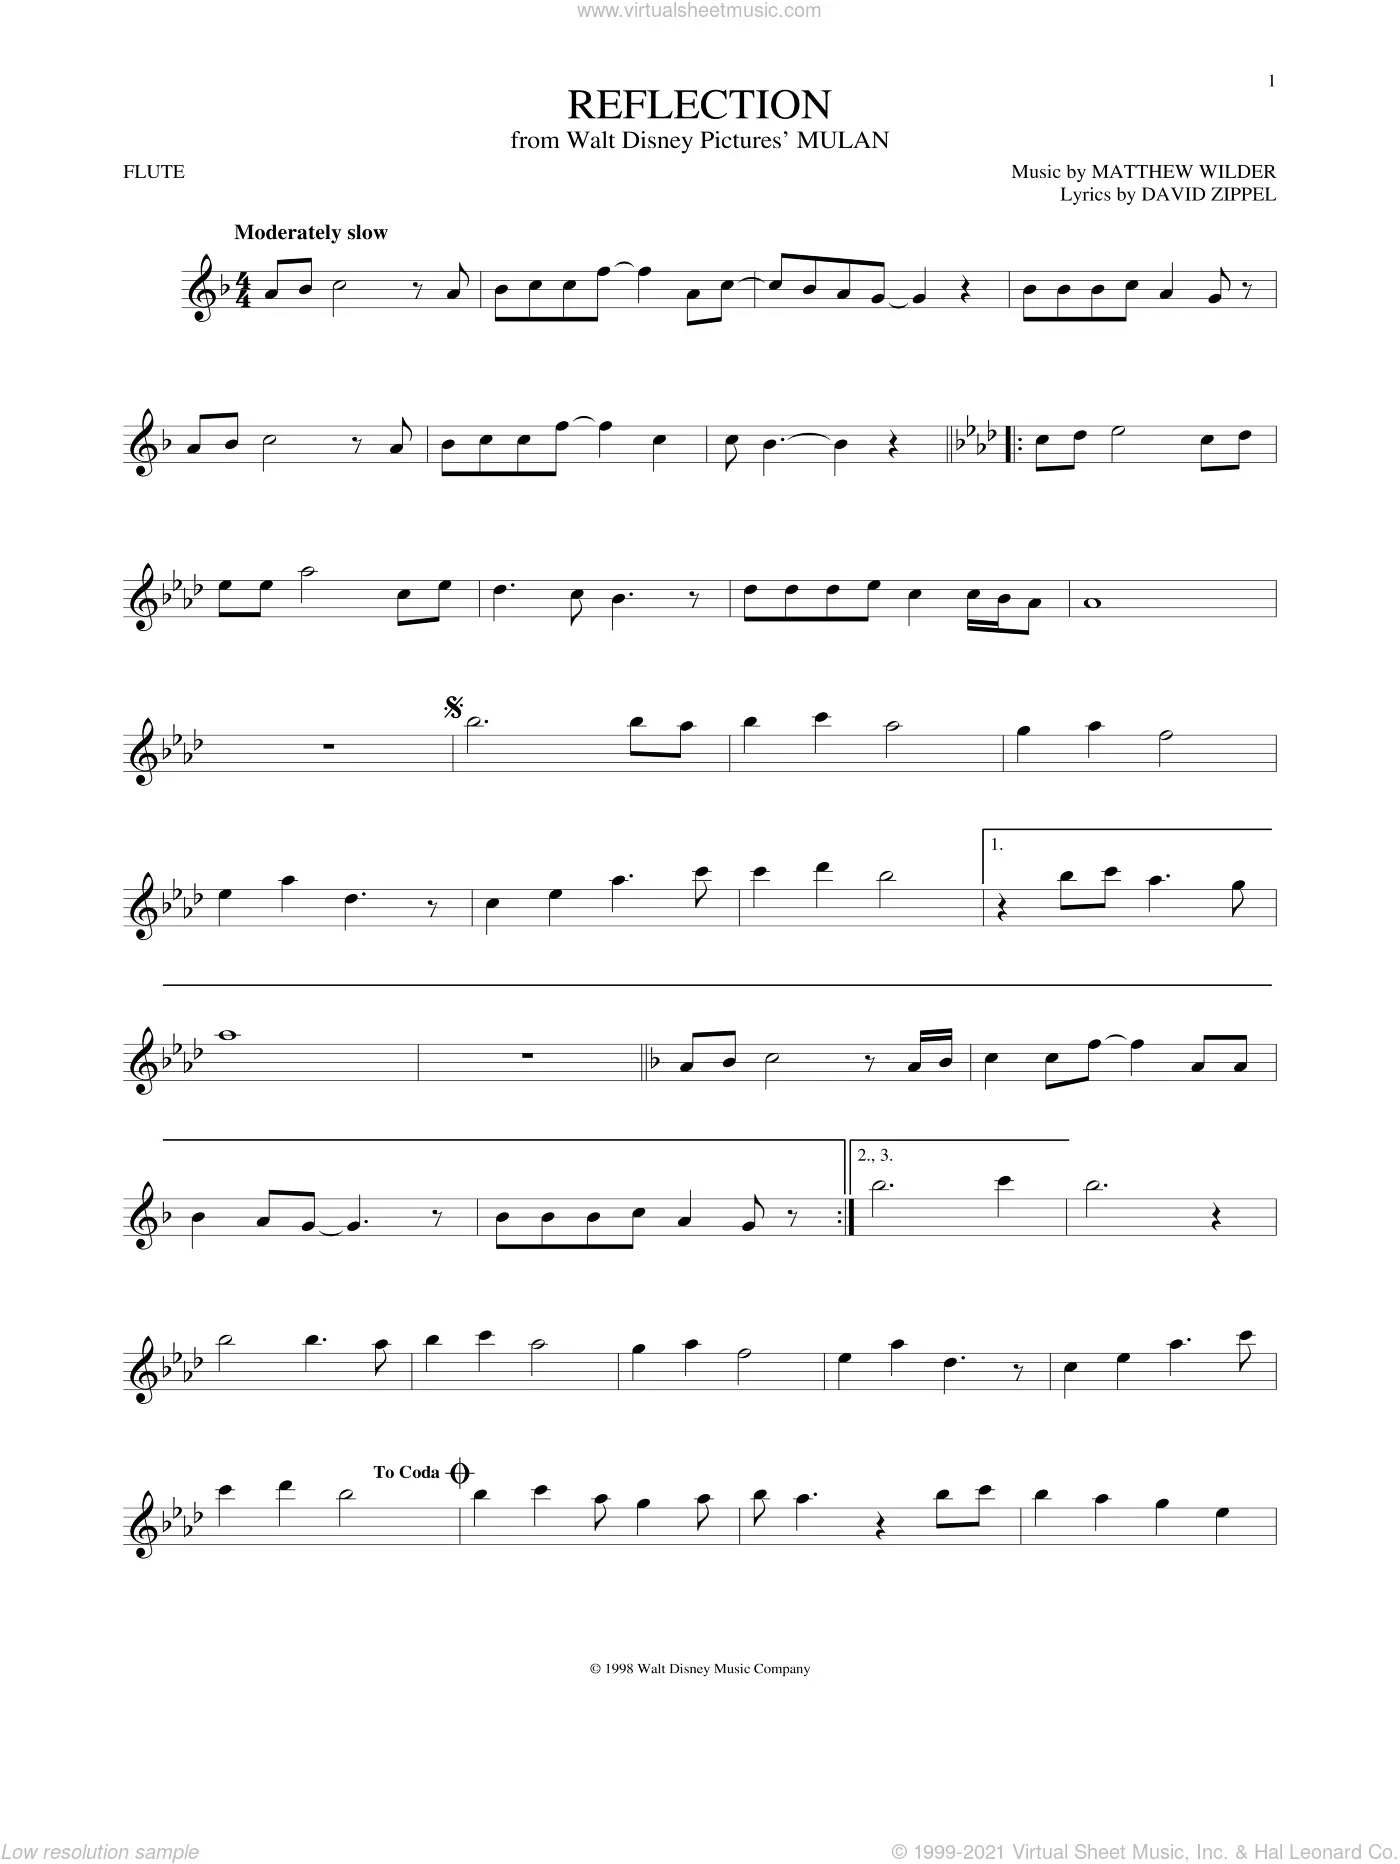 Download Digital Sheet Music Of Reflection For Flute